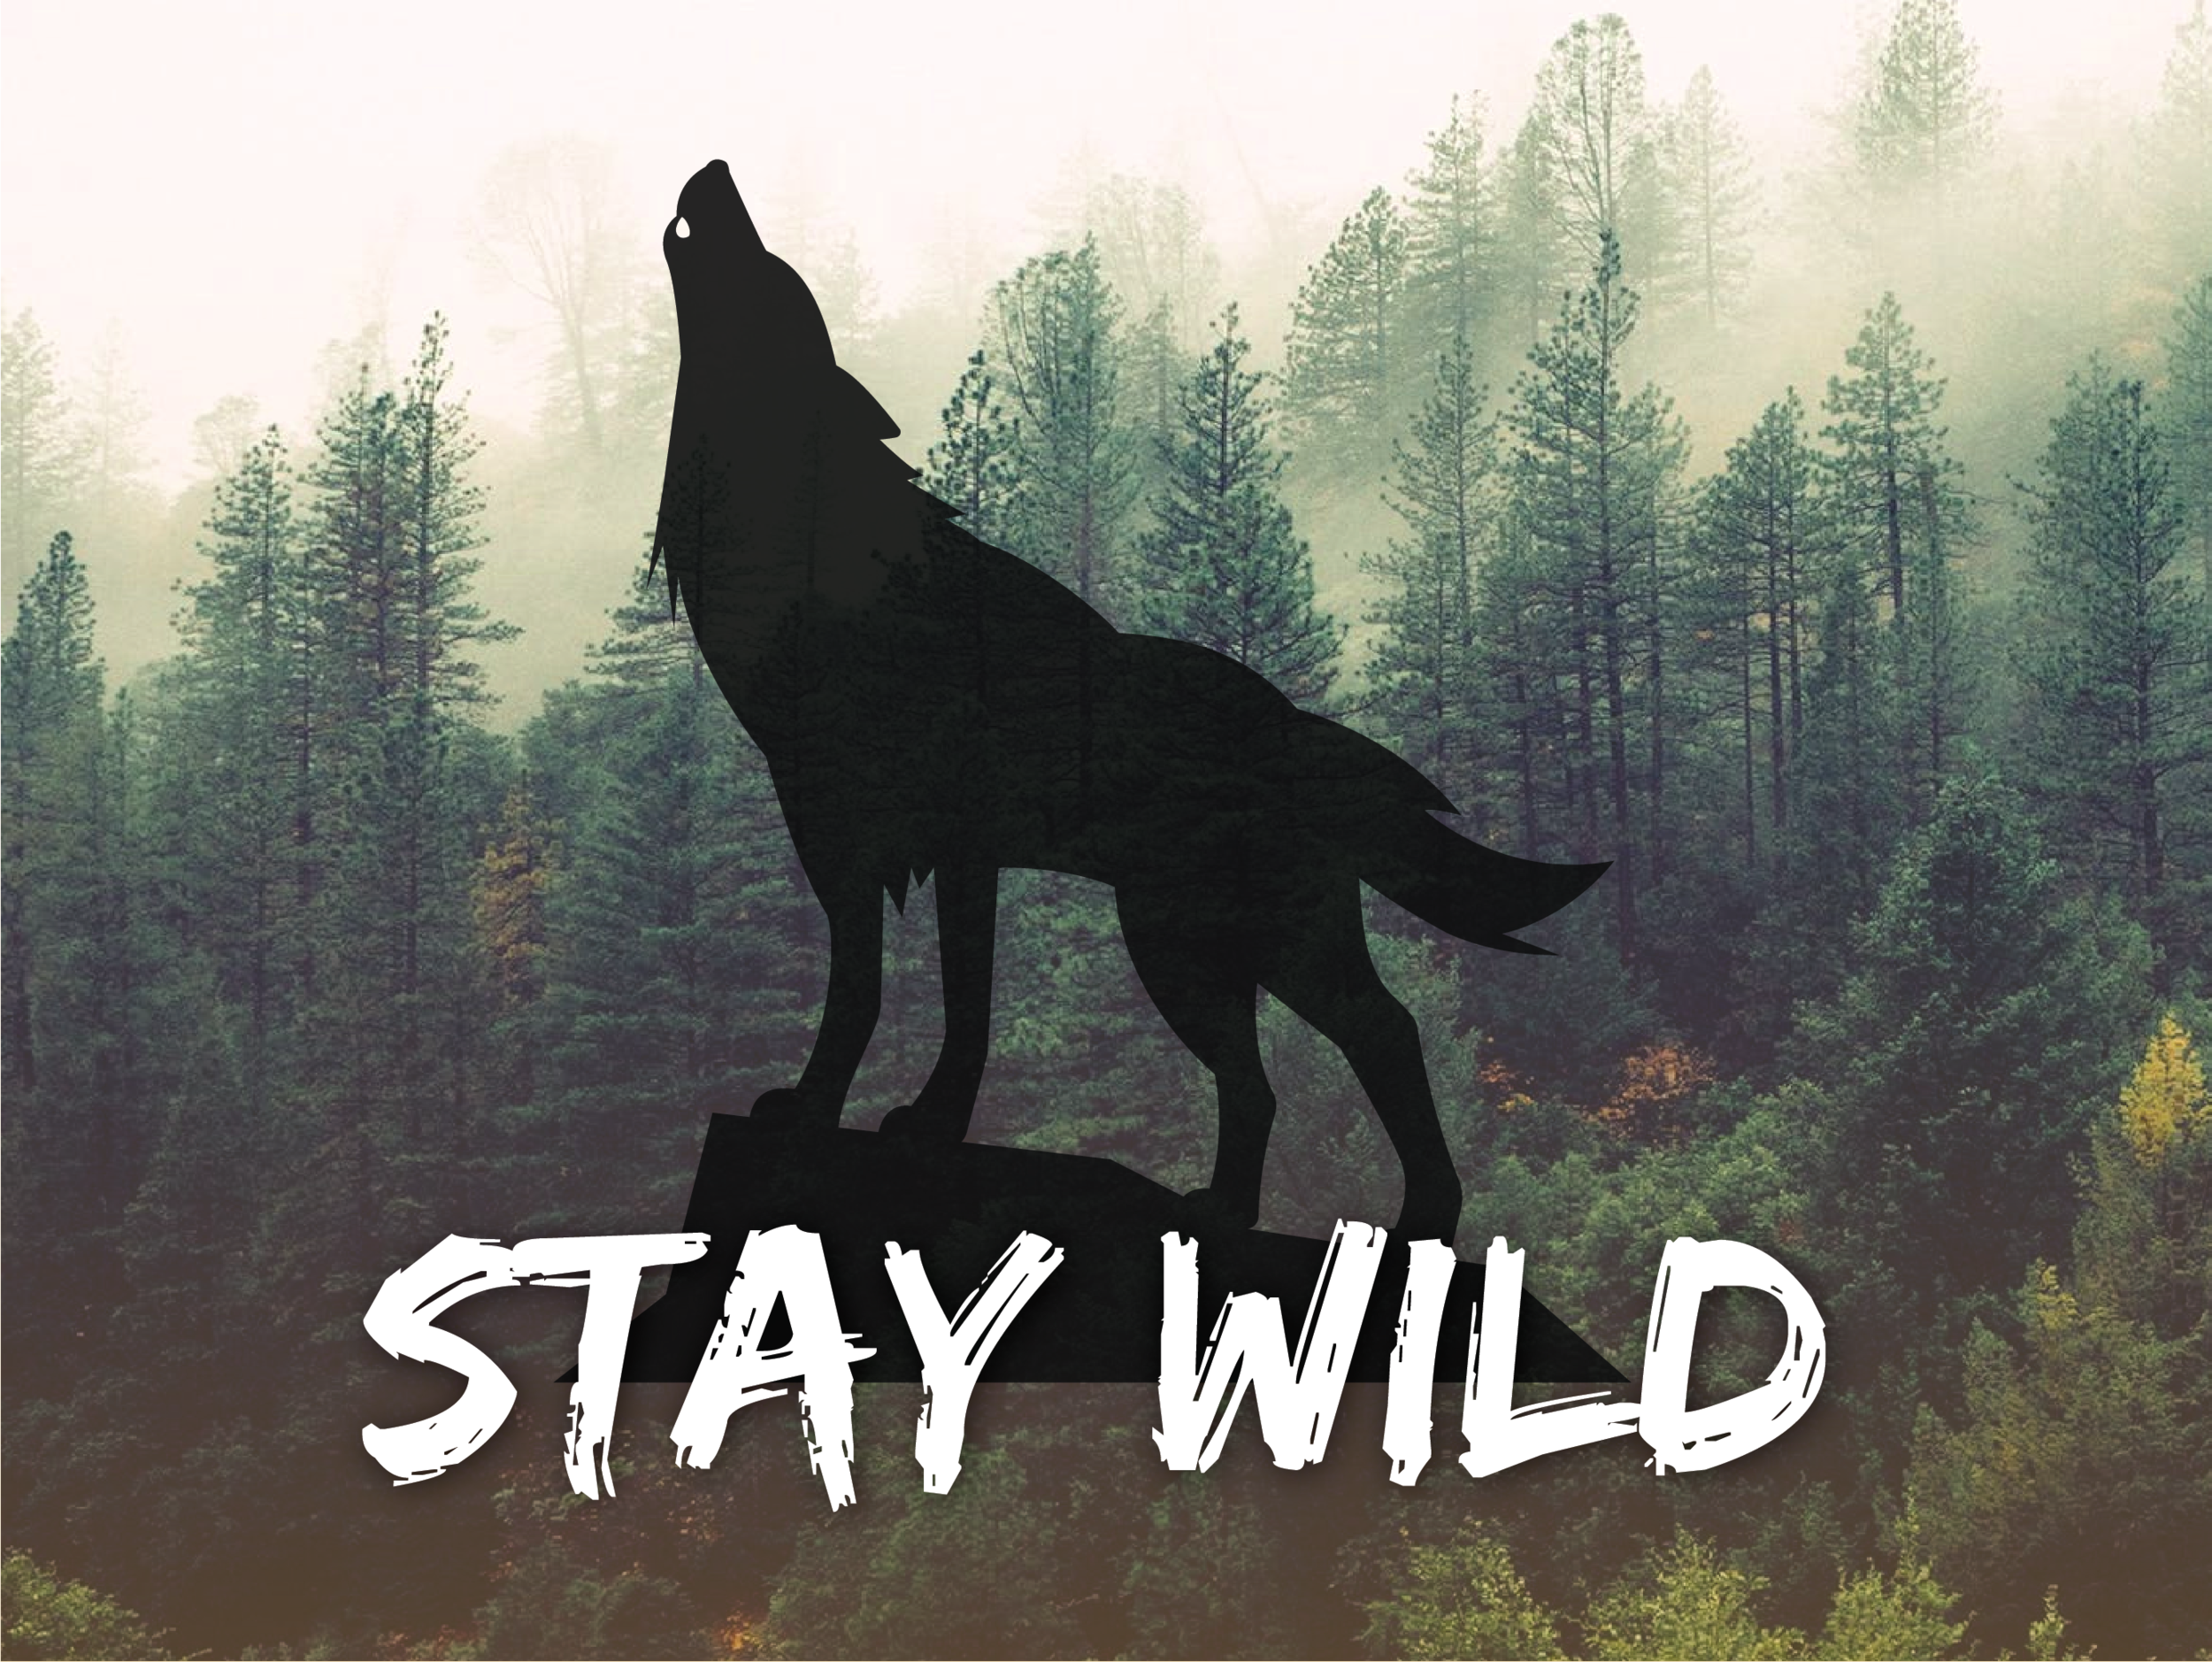 Stay Wild sticker final.png